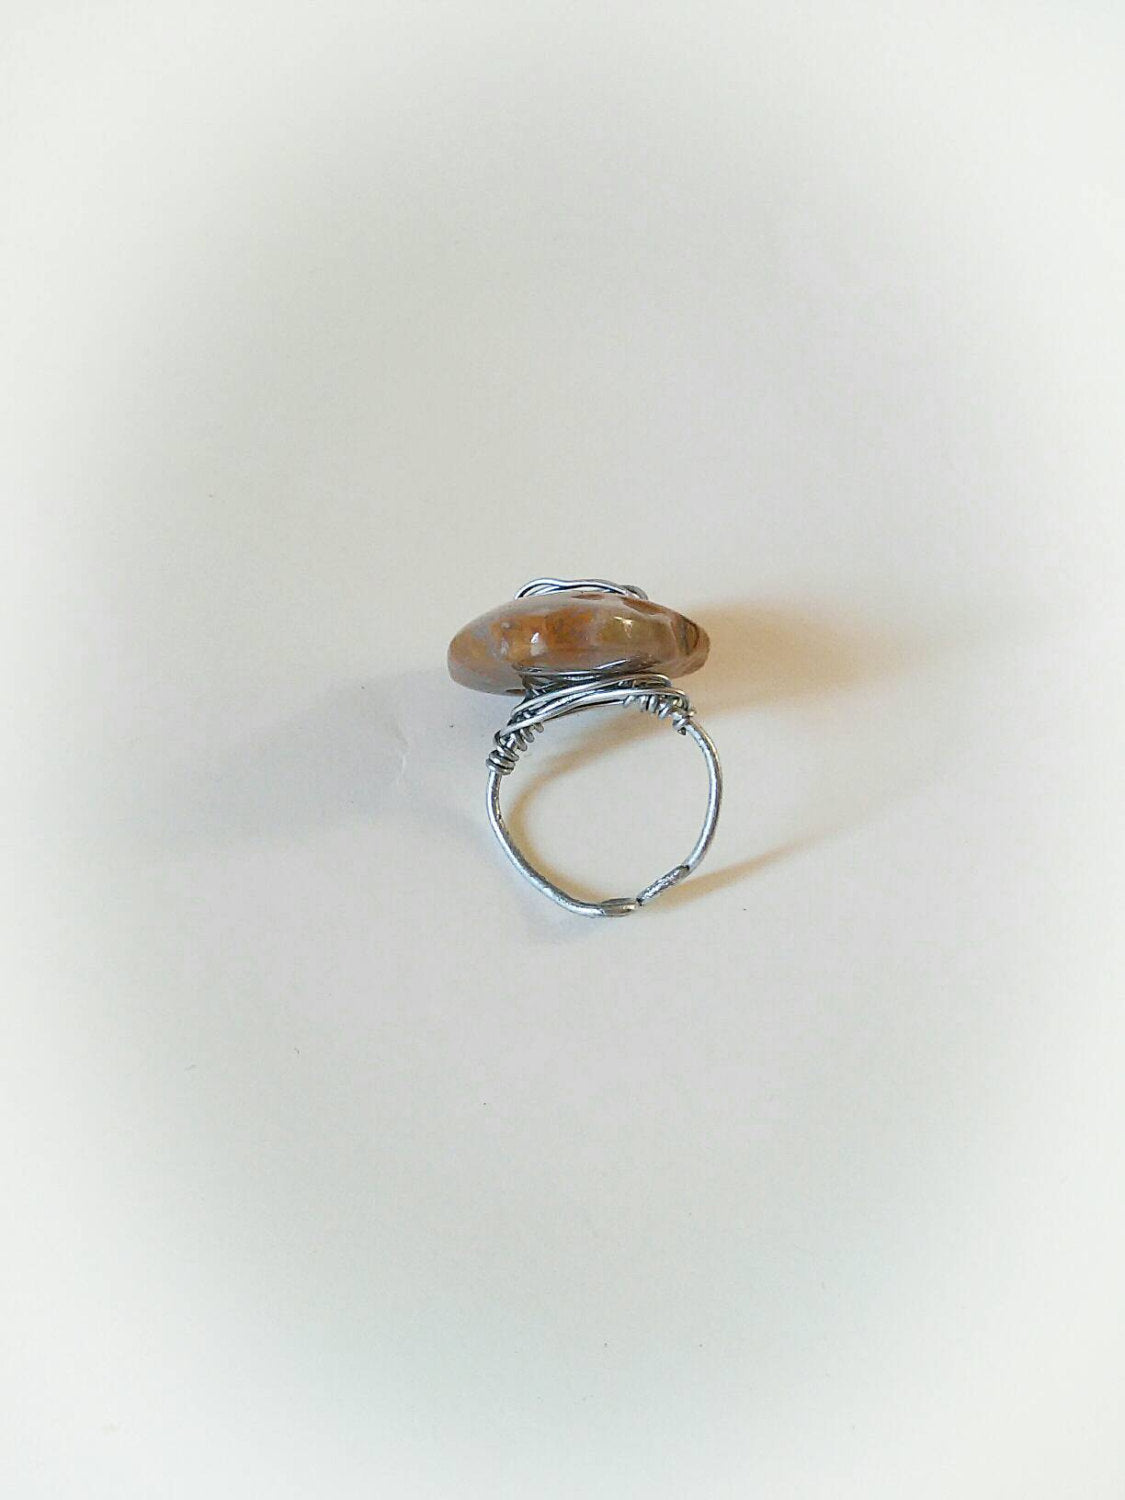 Big Yellow stone boho statement ring,boho birthday gift ring, big hippie stone ring, adjustable ring, silver, wire boho ring, statement ring